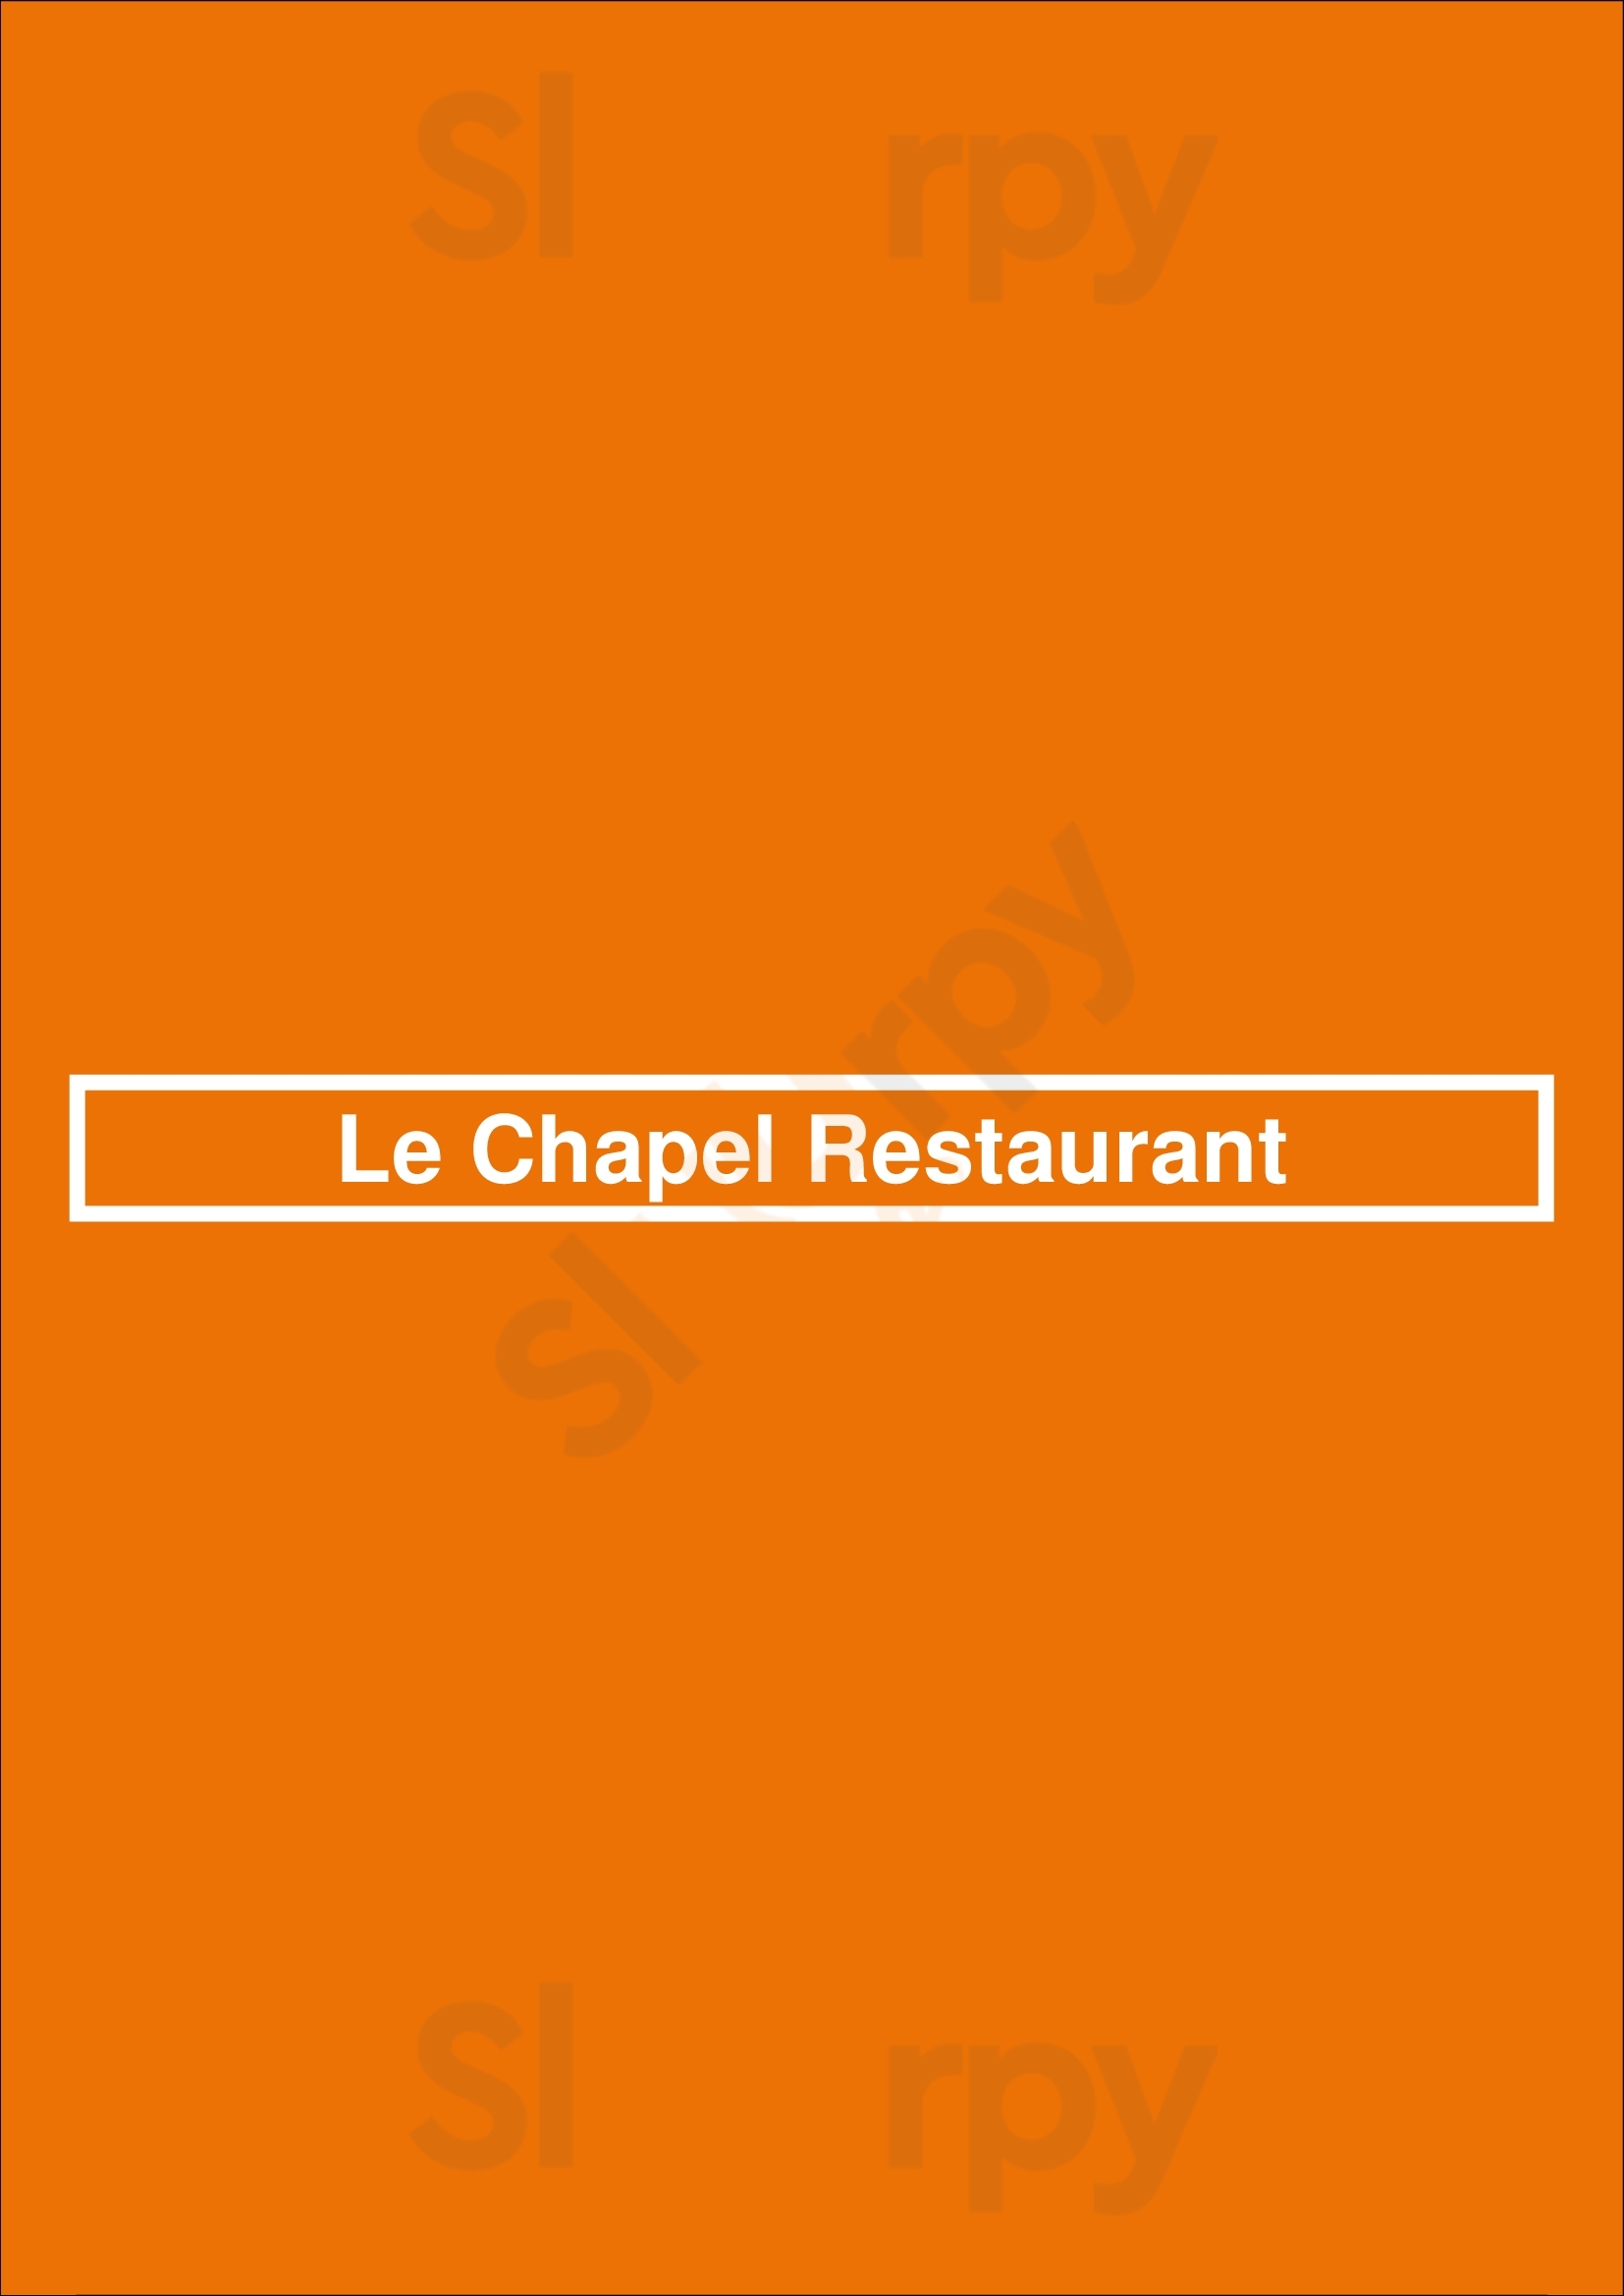 Le Chapel Restaurant Waterloo Menu - 1